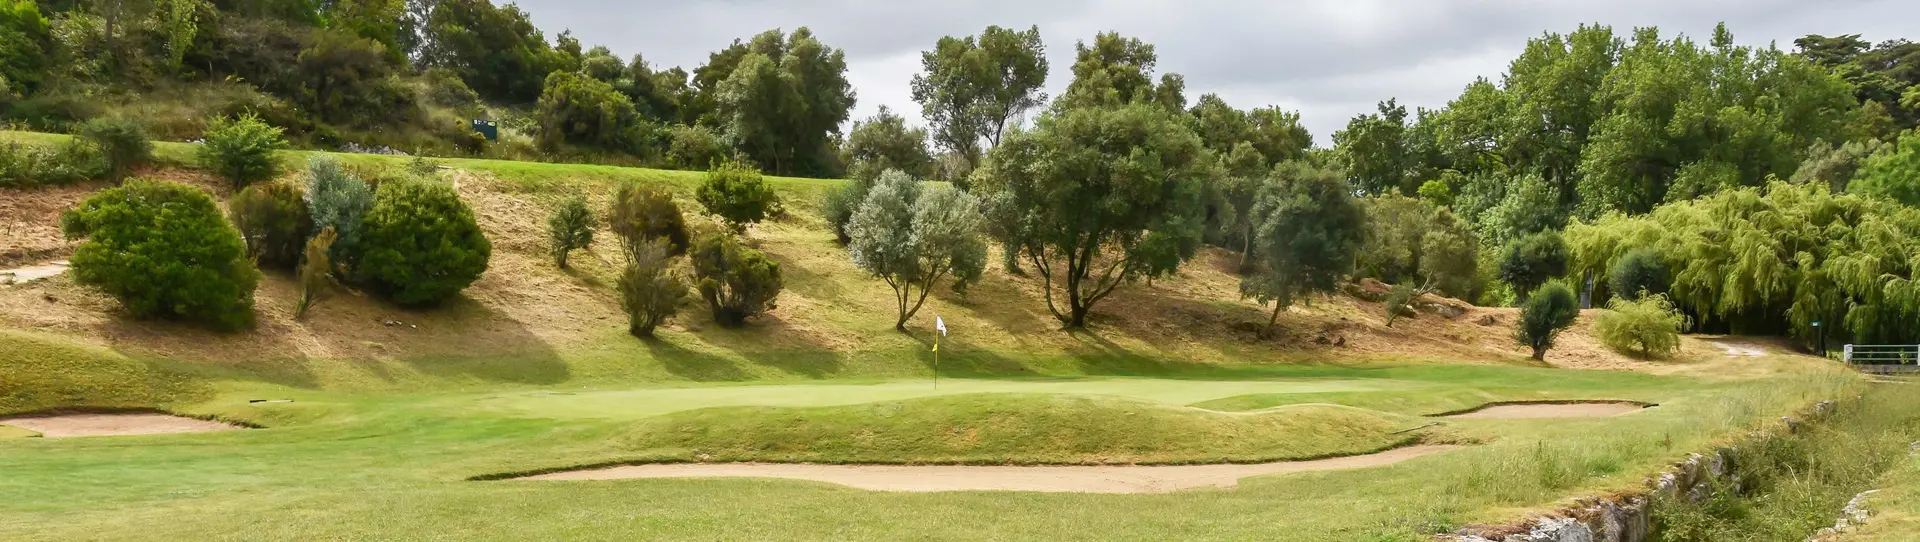 Portugal golf courses - Lisbon Sports Club - Photo 1